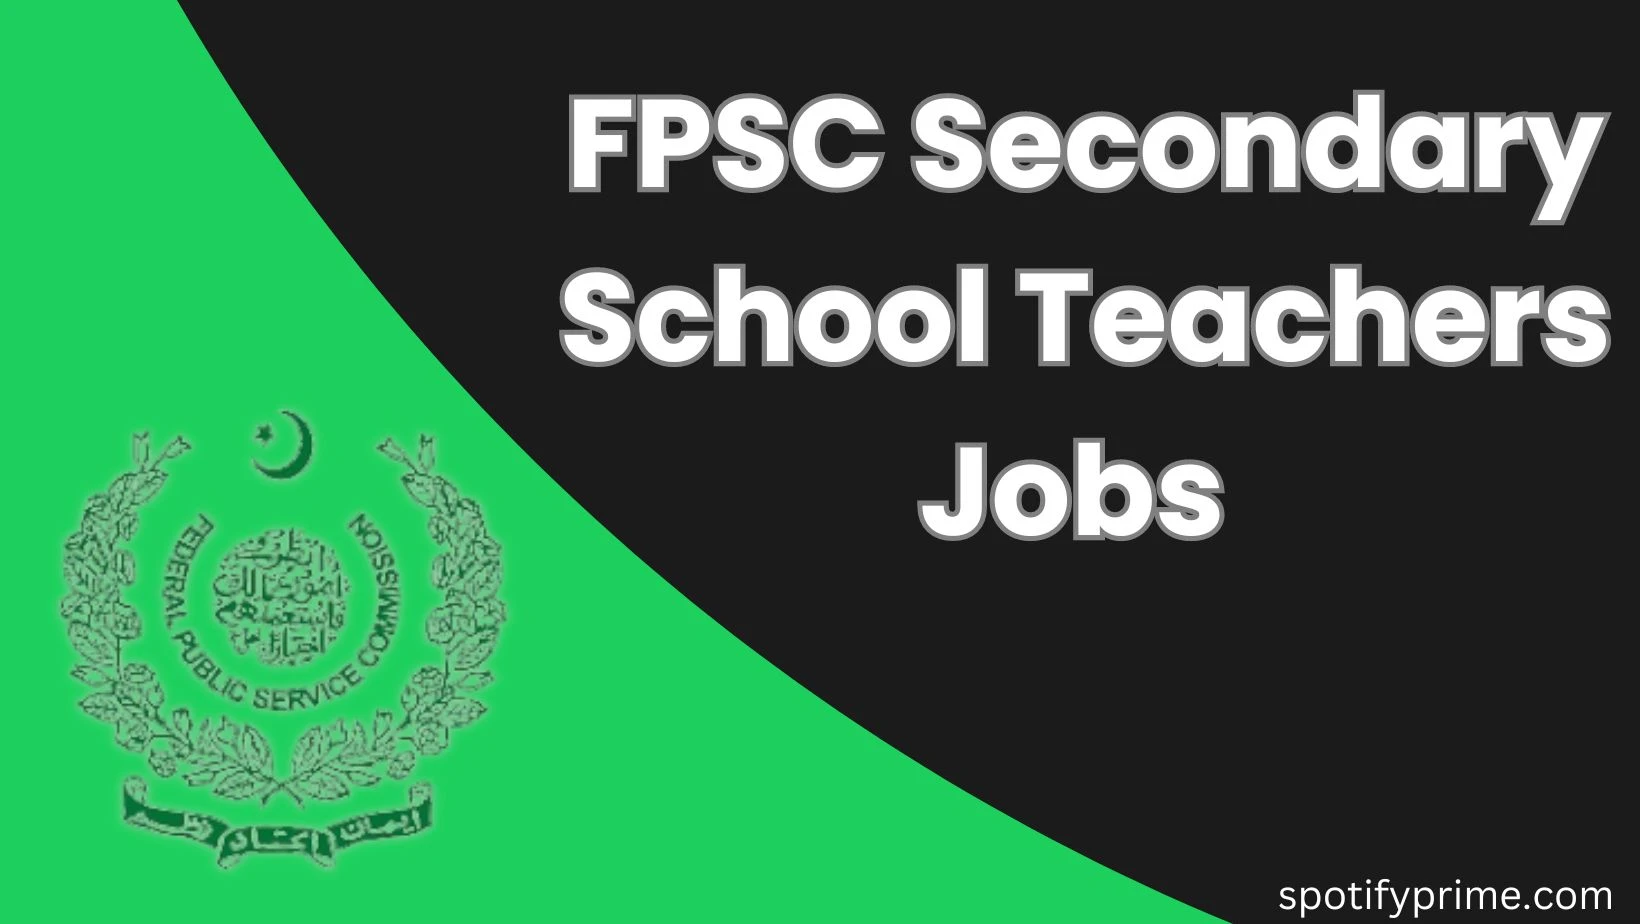 FPSC Secondary School Teachers JobsFPSC Secondary School Teachers Jobs